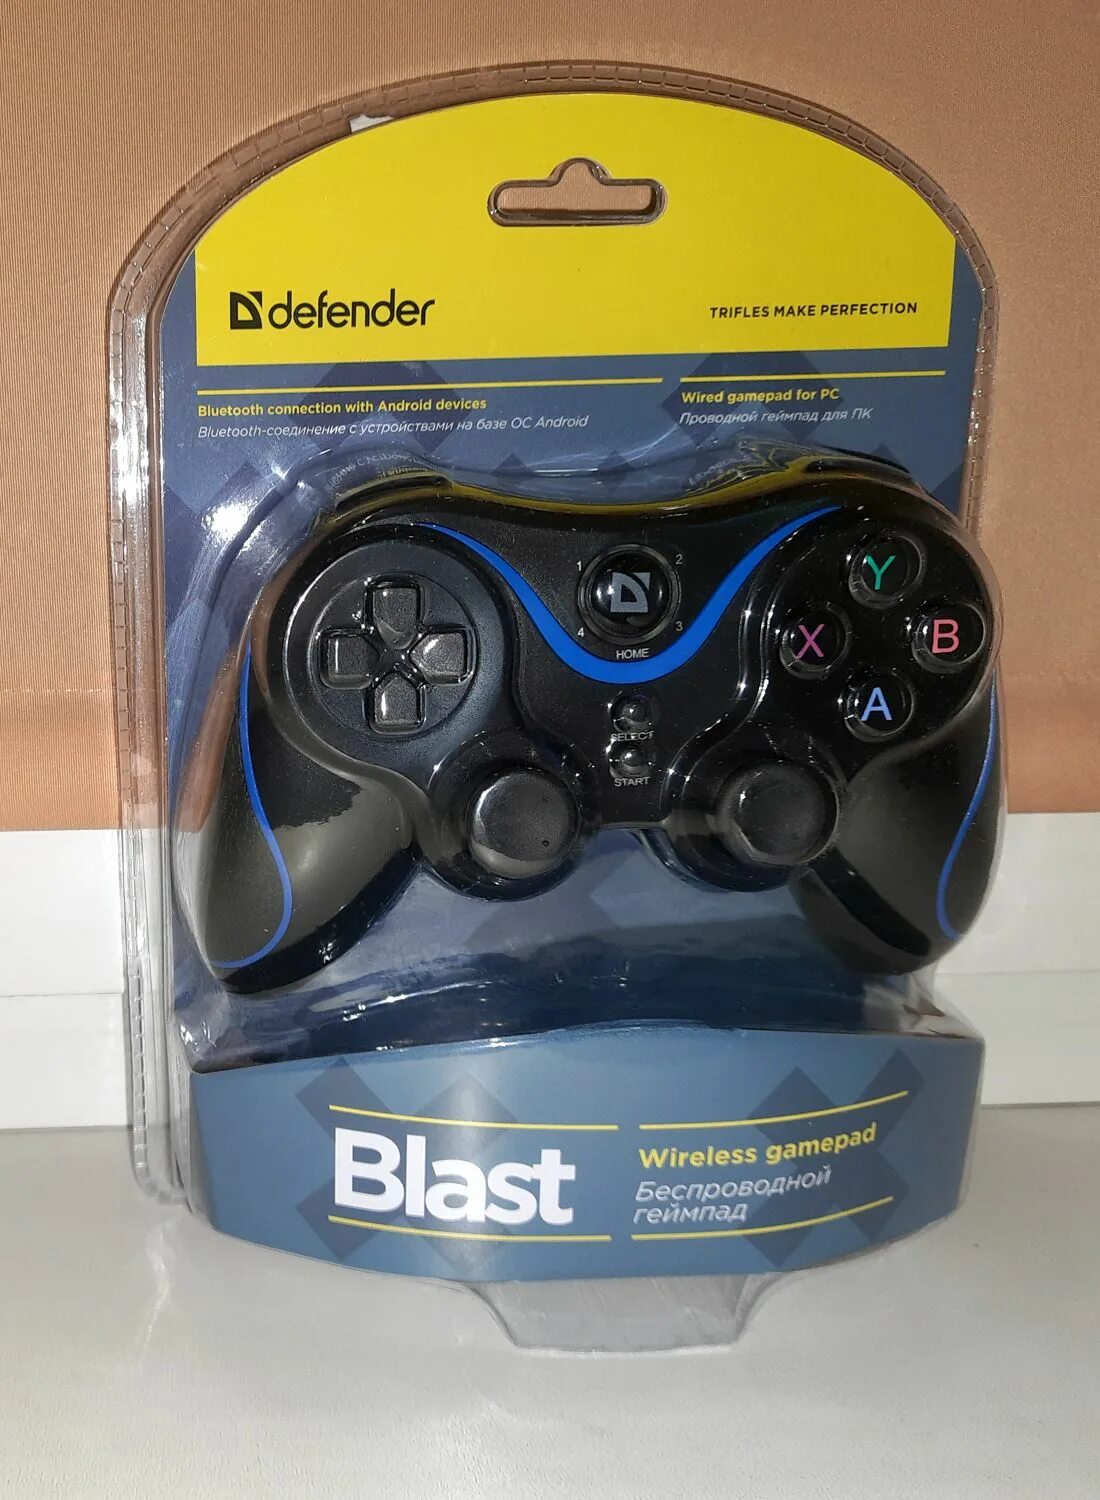 Геймпад Defender 64285. Беспроводной геймпад Defender Blast. Defender Blast (64285) Wireless Gamepad. Defender Blast USB, Bluetooth, Android, li-ion [64285] {геймпад беспроводной}. Как подключить defender blast